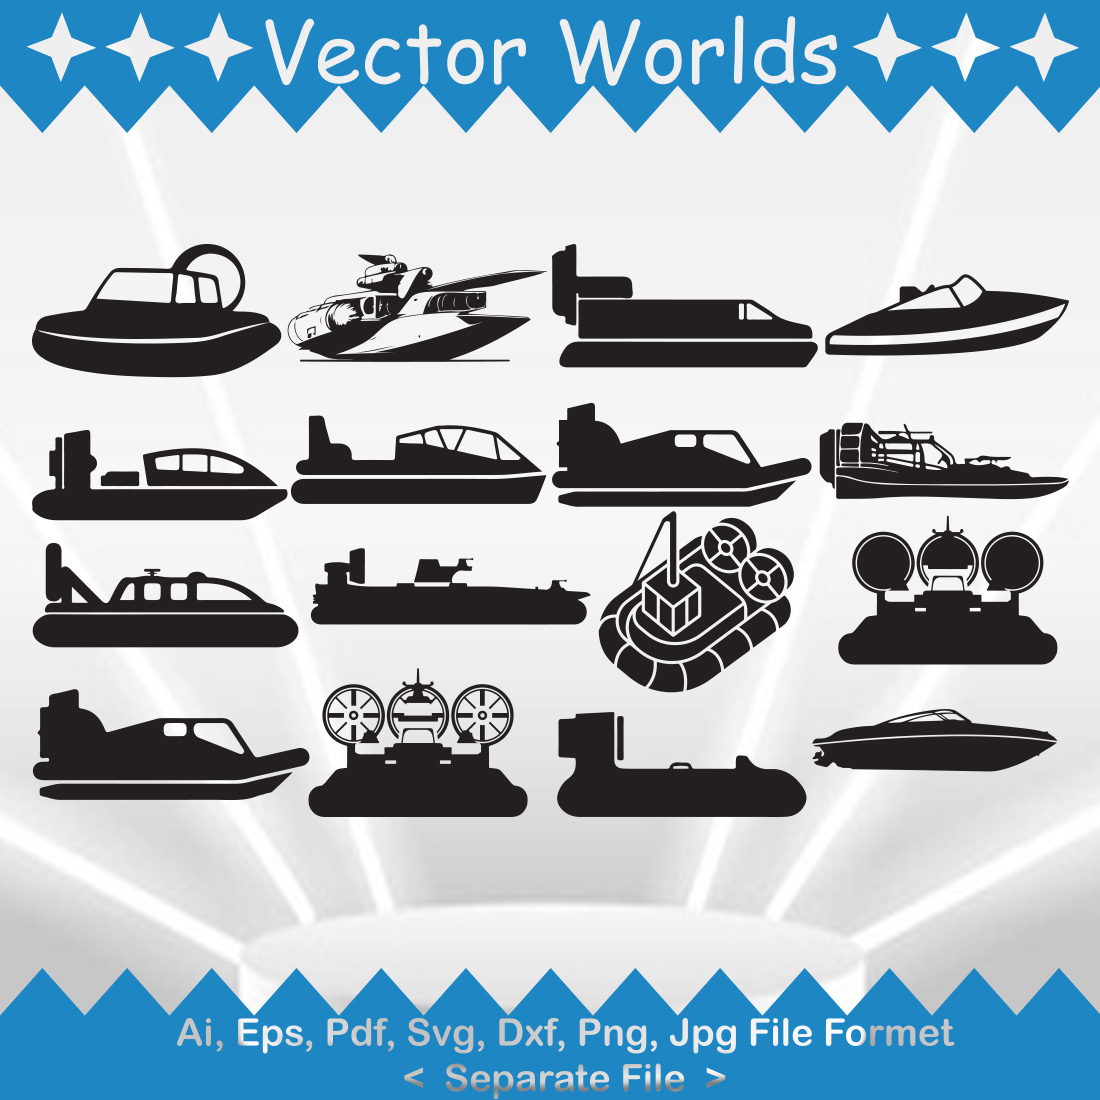 Hovercraft SVG Vector Design cover image.